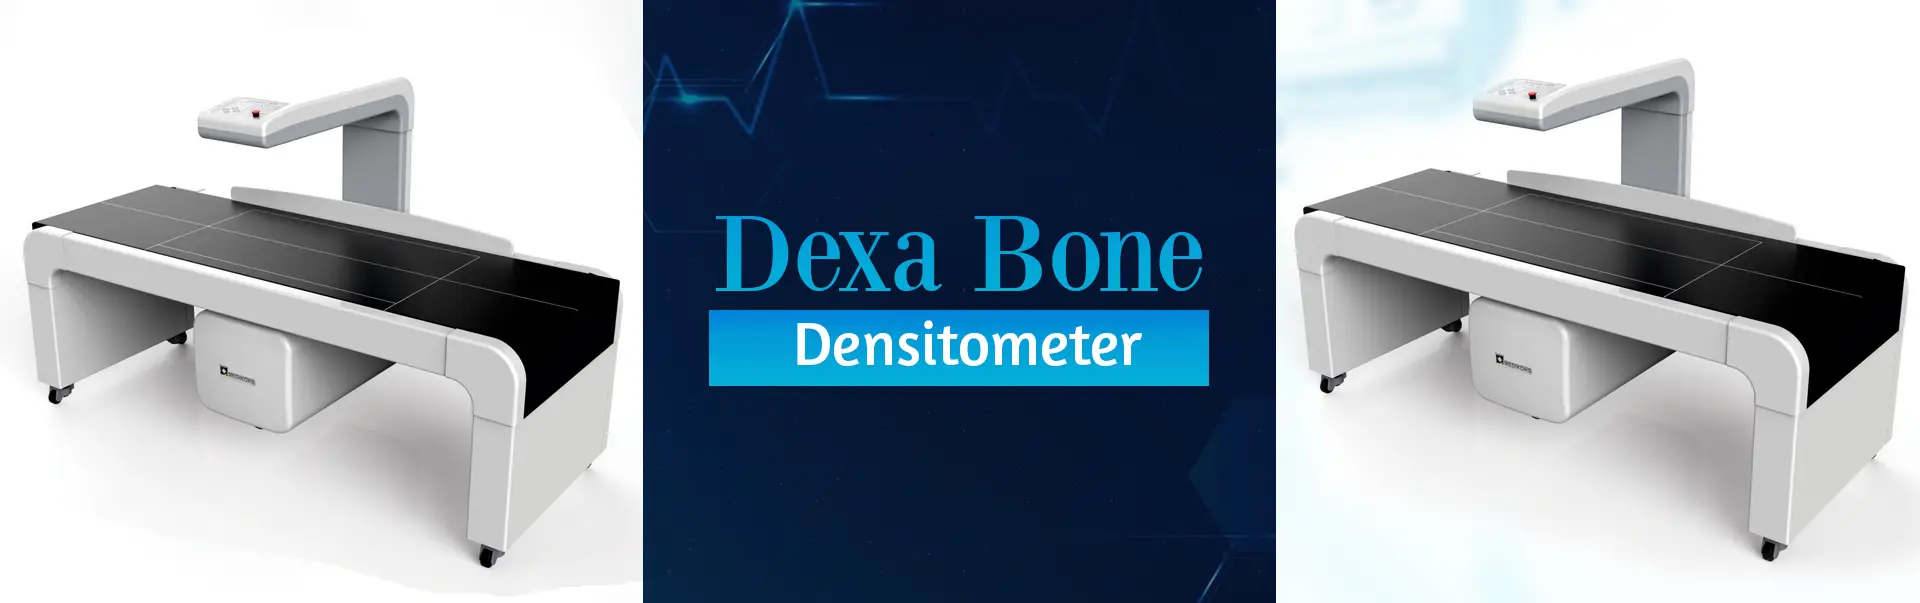 Dexa Bone Densitometer Manufacturers in Mumbai